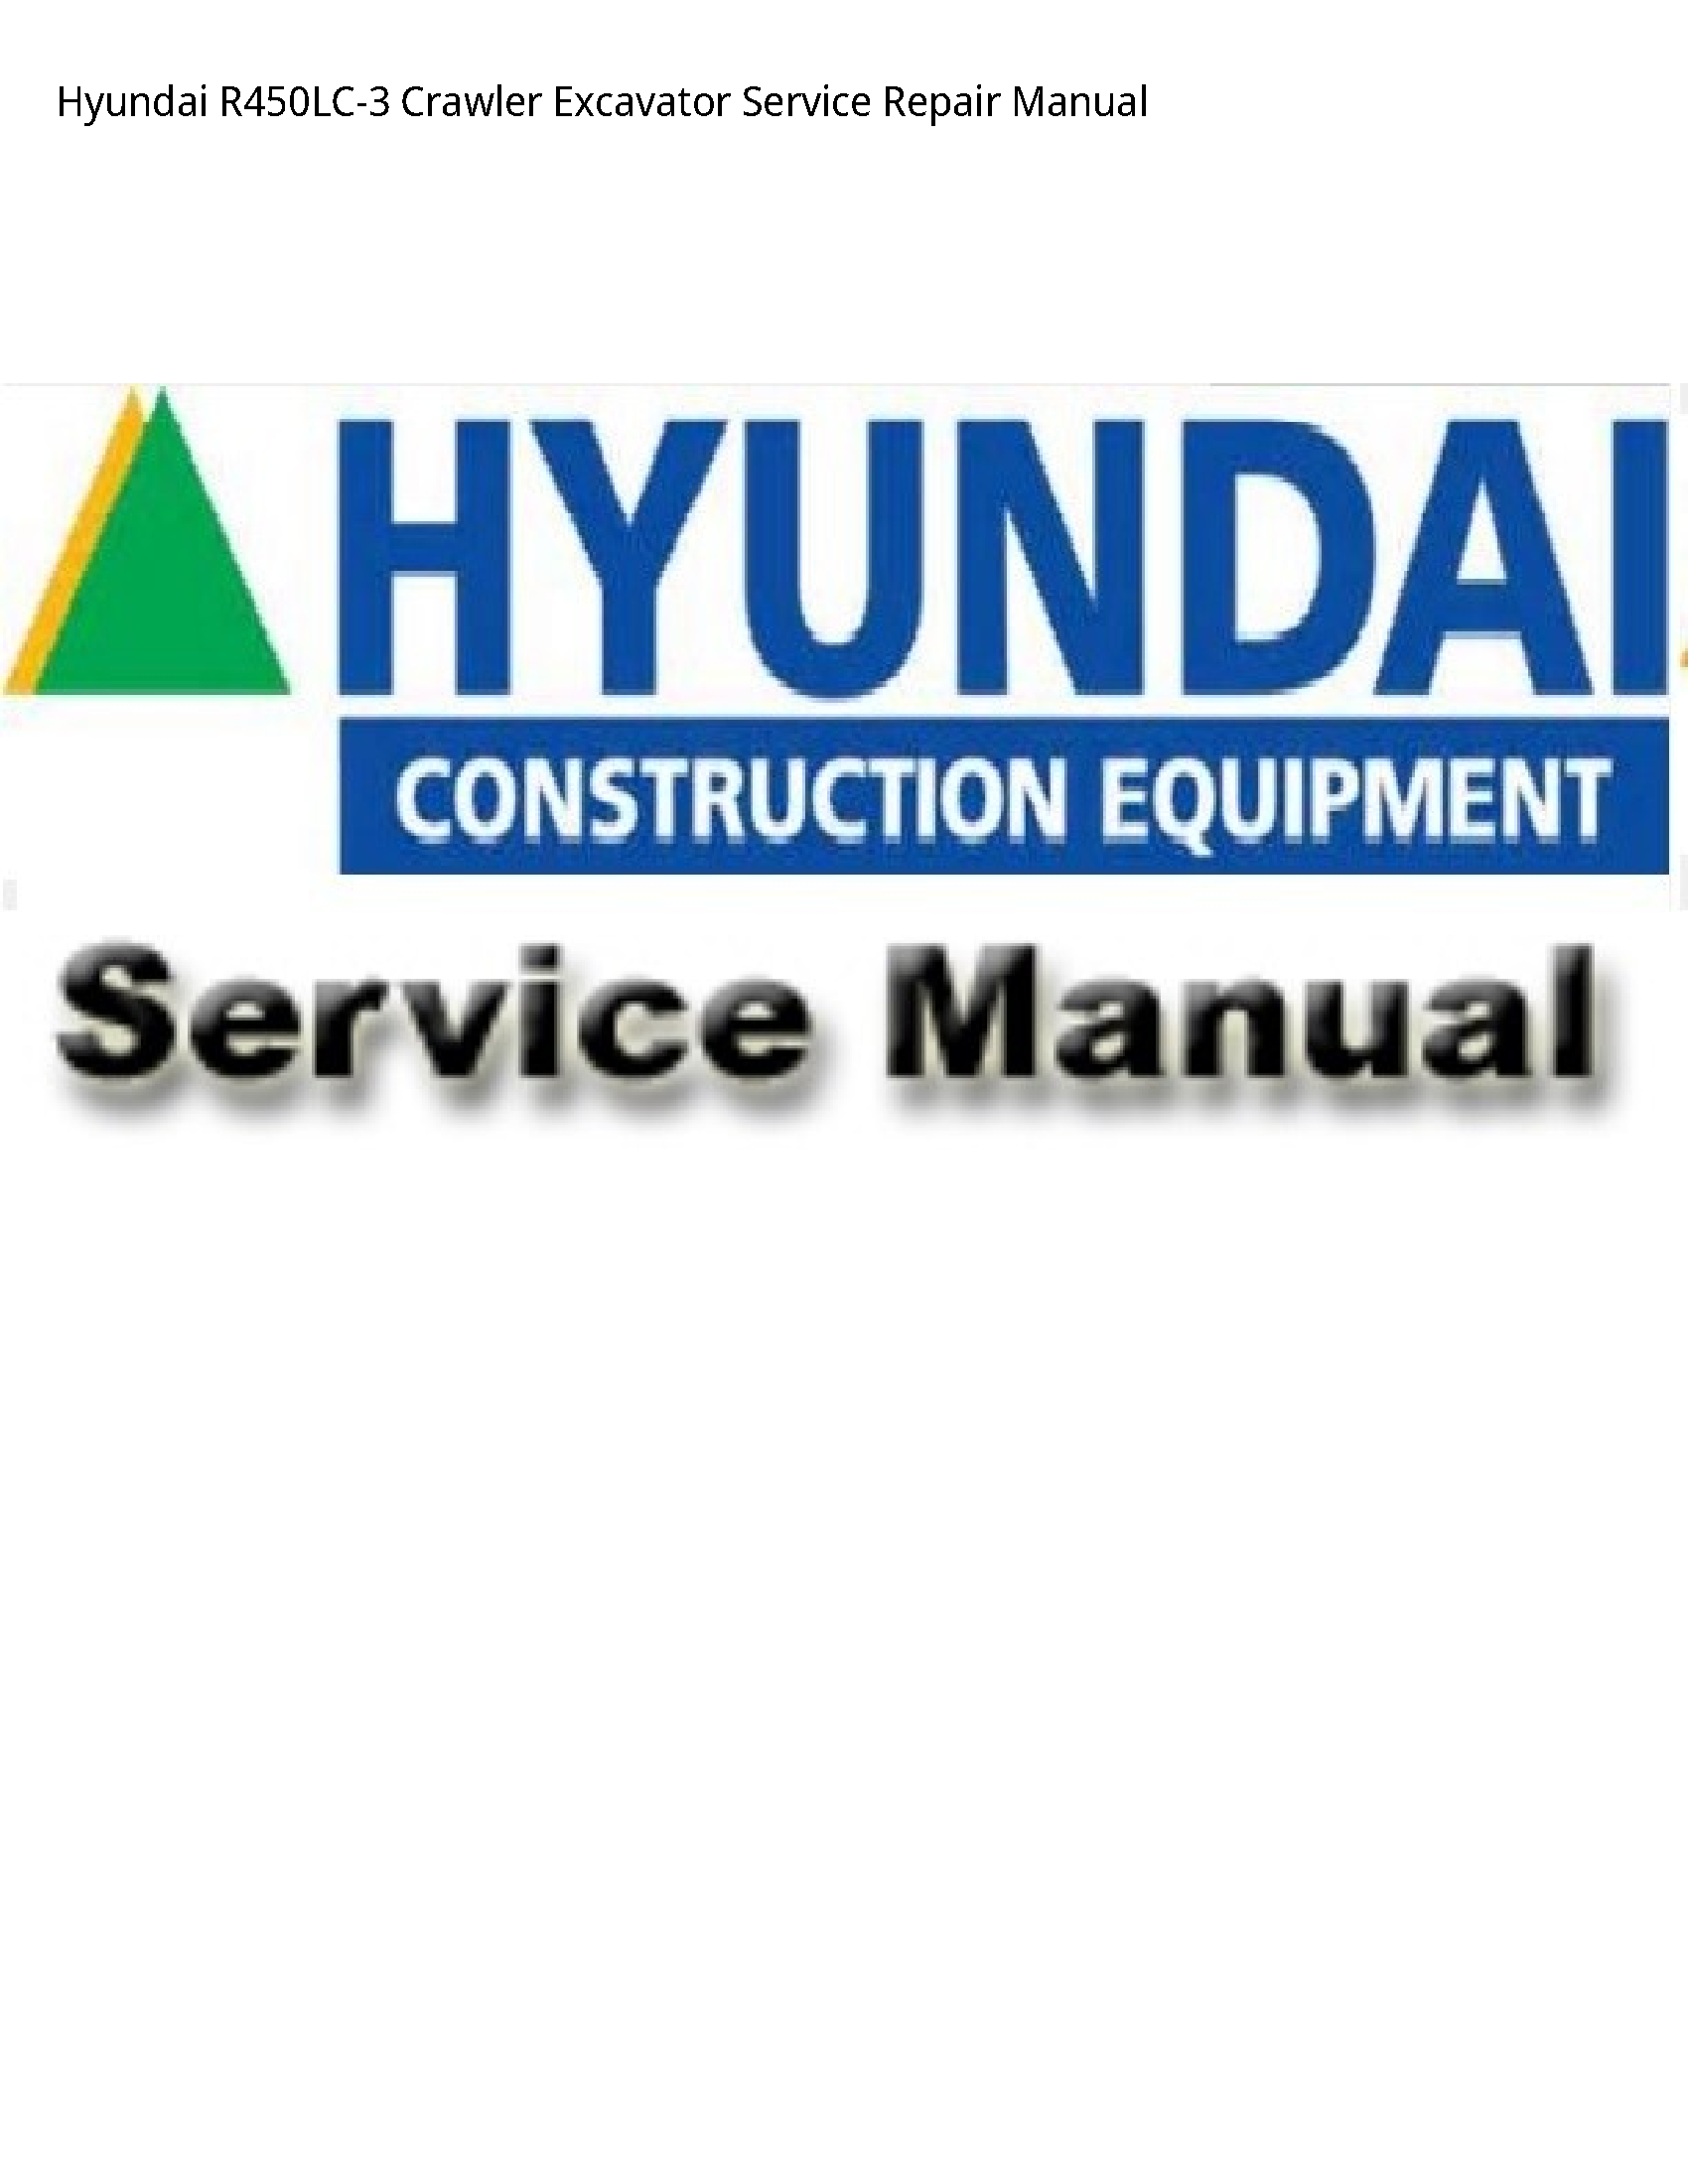 Hyundai R450LC-3 Crawler Excavator manual